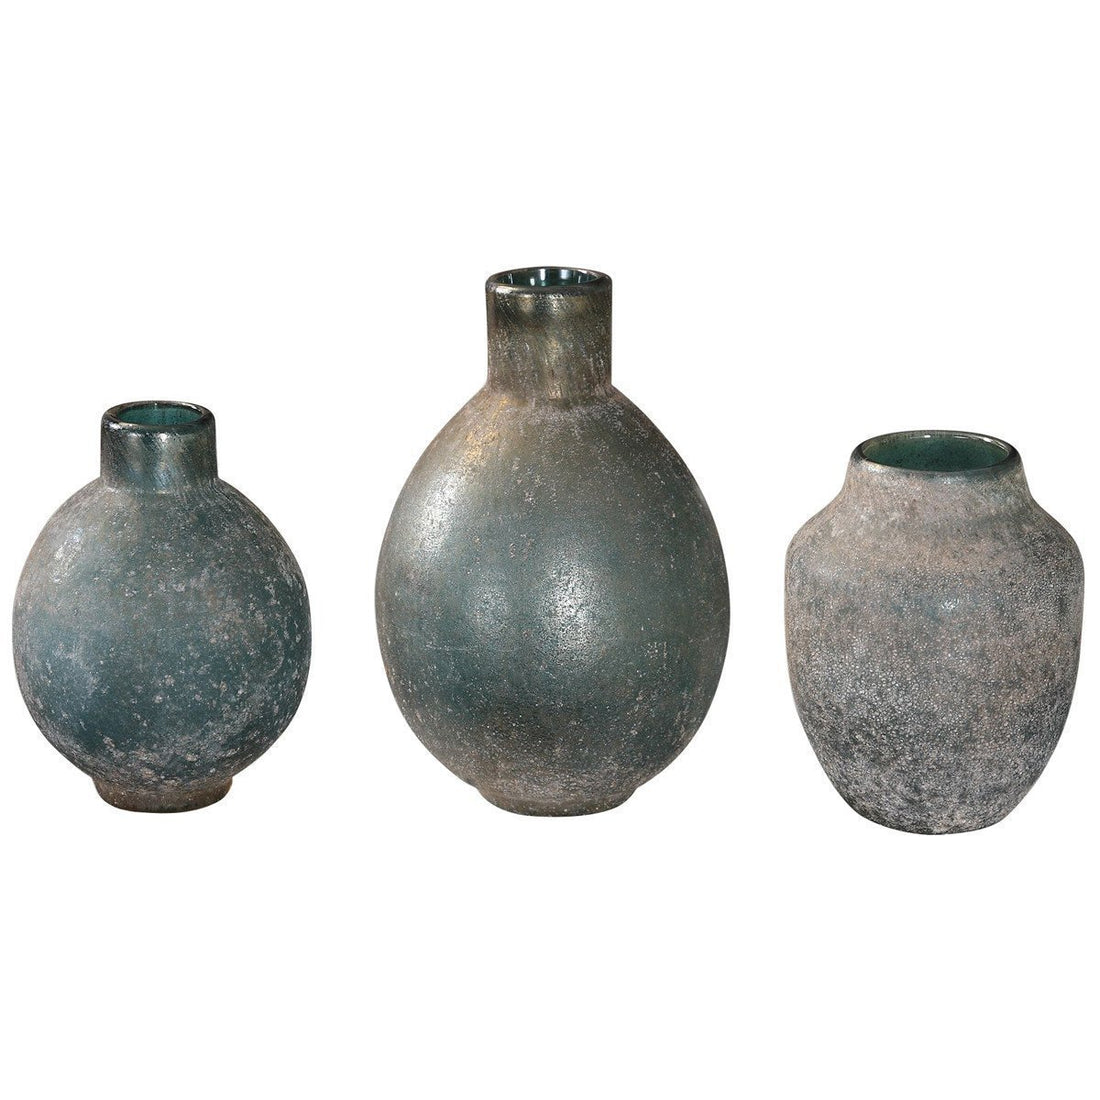 Uttermost Mercede Weathered Blue-Green Vases 3-Piece Set